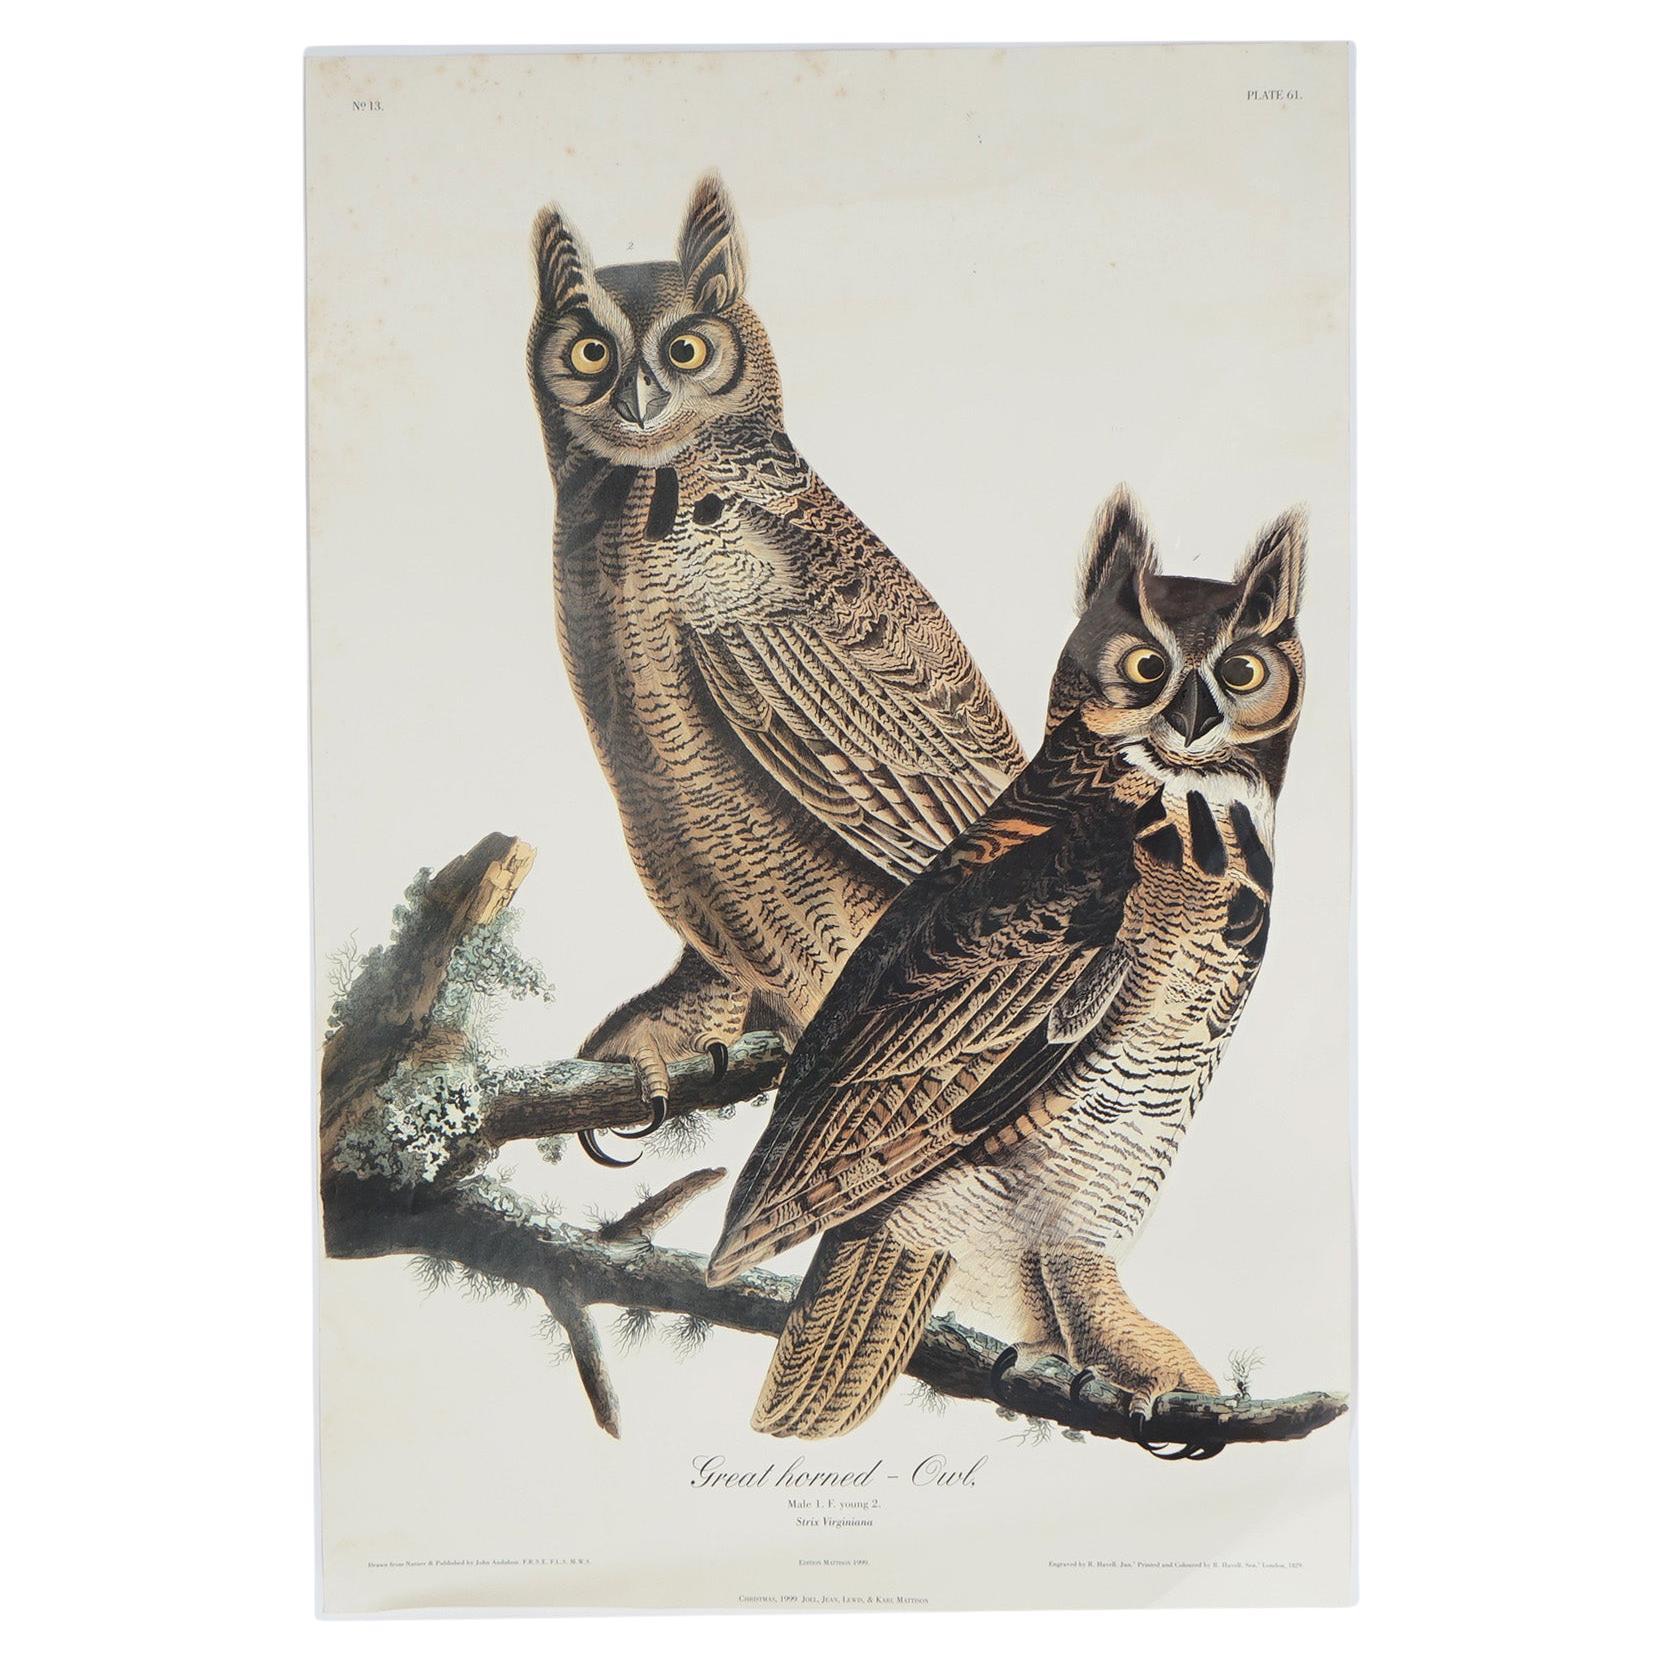 R. Havell Double Elephant Folio Audubon Print of Great Horned Owls C1999